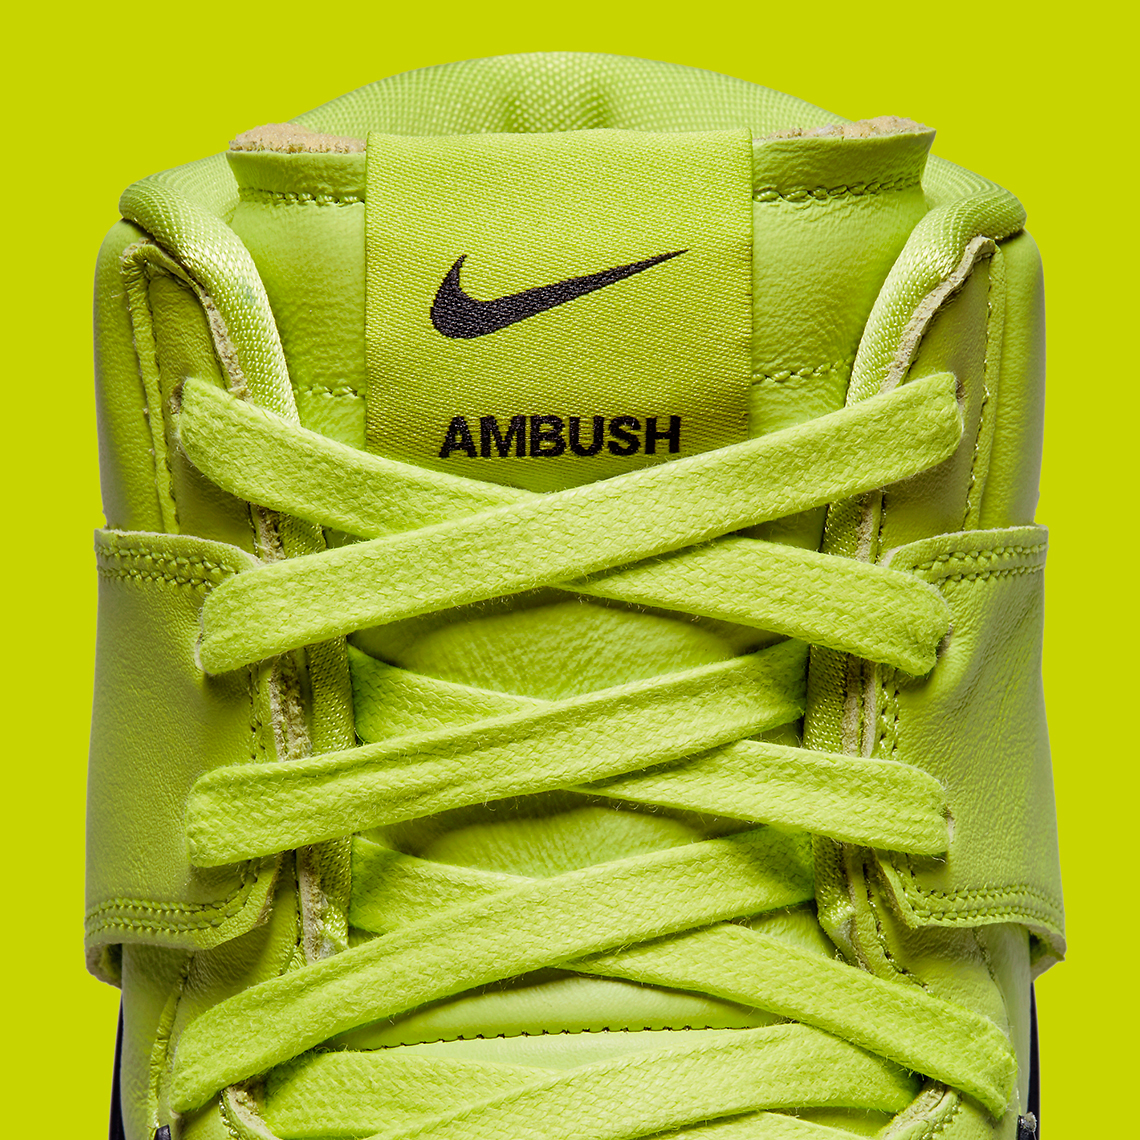 ambush Nike lebron dunk high atomic green CU7544 300 release date 8